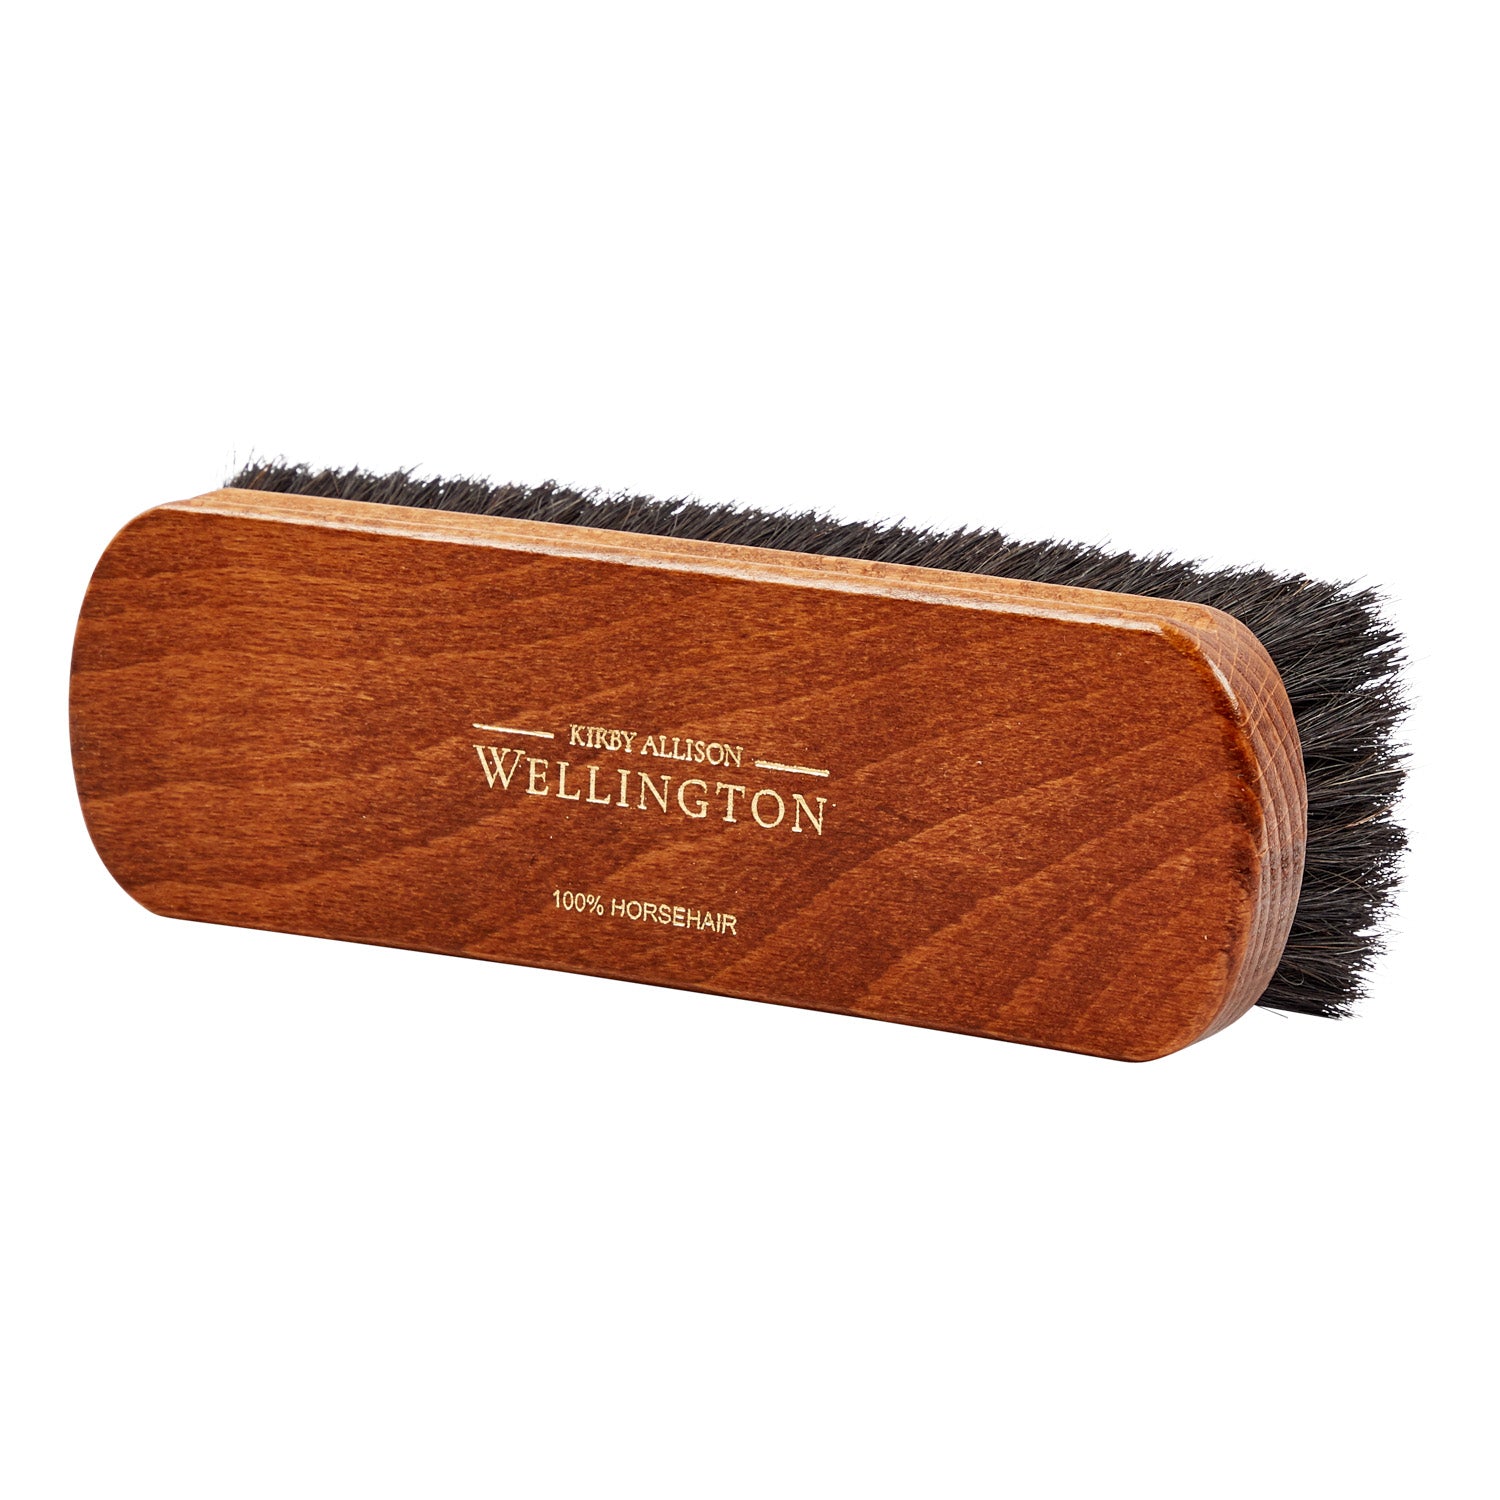 High-quality Medium Wellington Horsehair Shoe Polishing Brush featuring horsehair bristles from KirbyAllison.com.